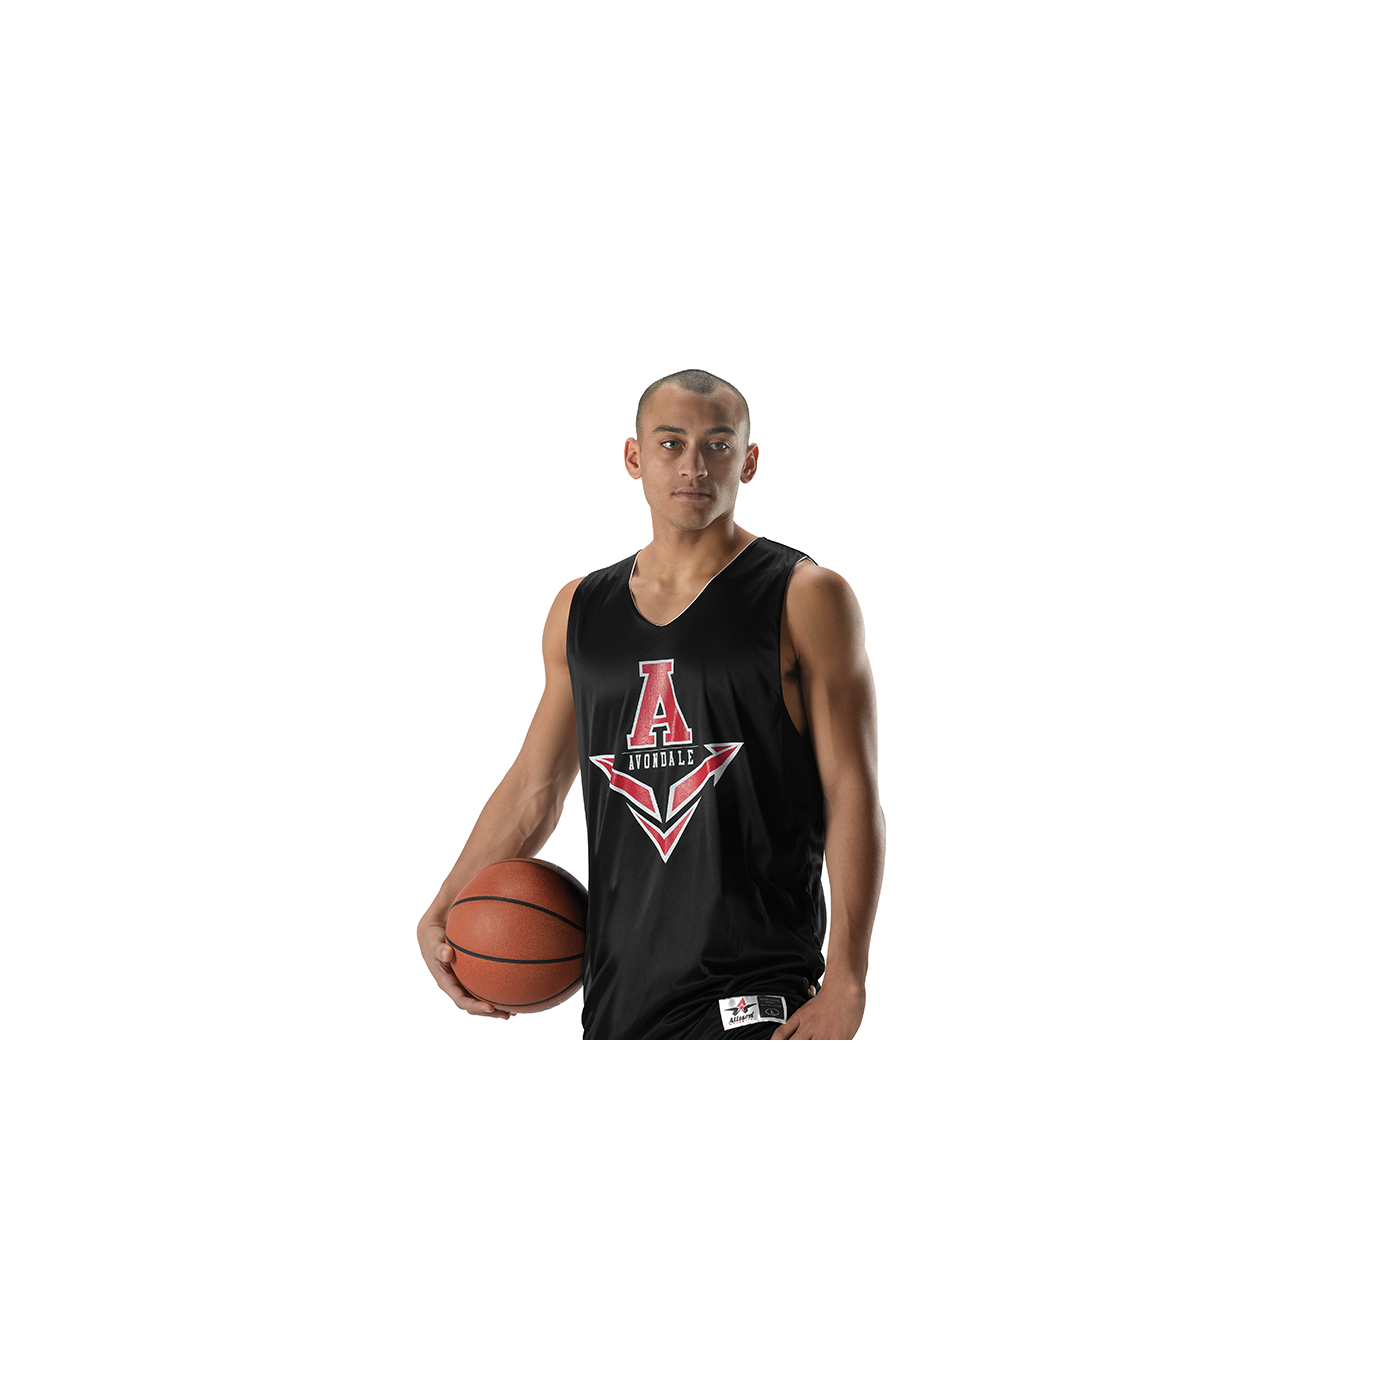 Custom All-Star Reversible Basketball Uniform - 188 All Star 4XL-T / Women's